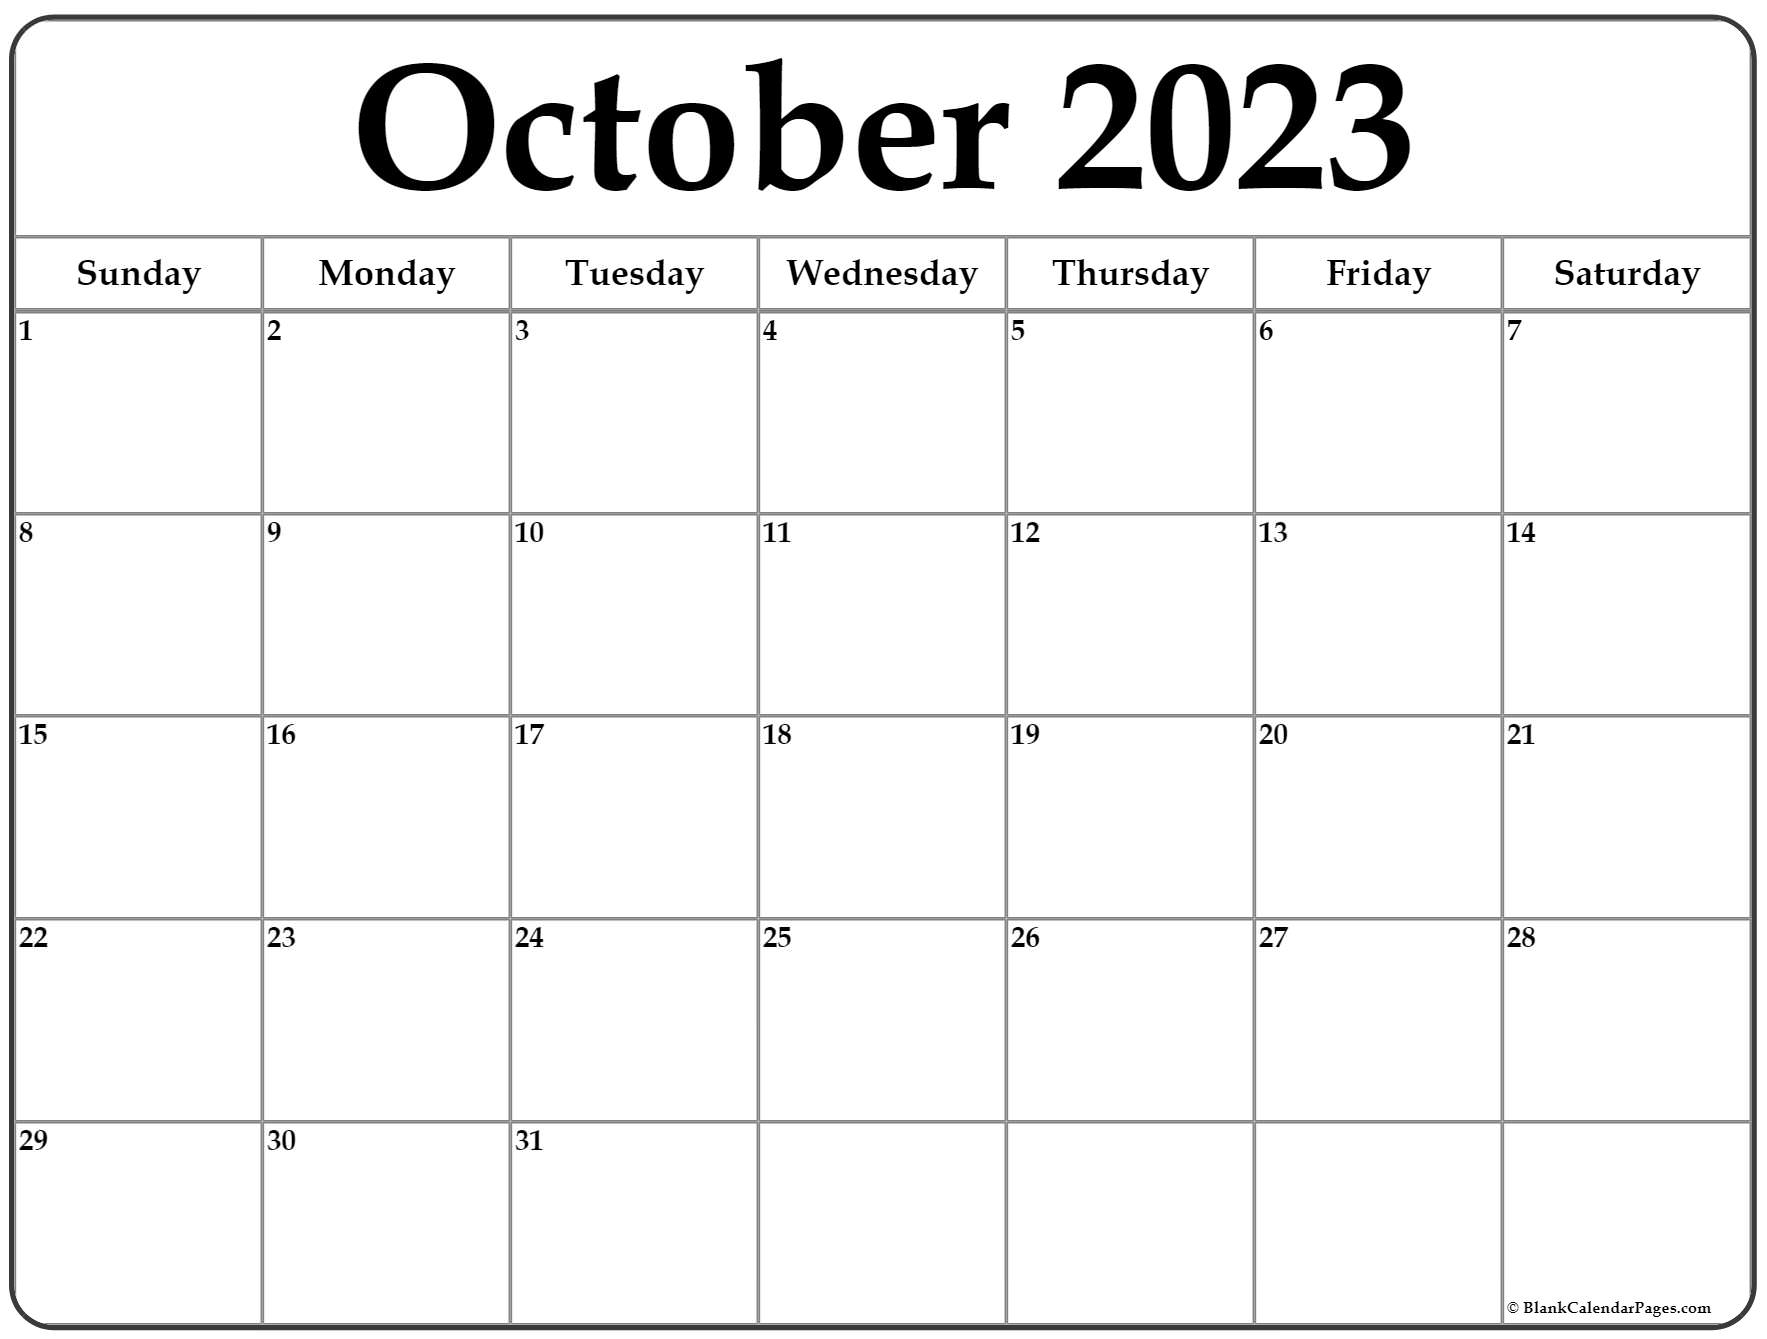 october-2023-calendar-printable-printable-world-holiday